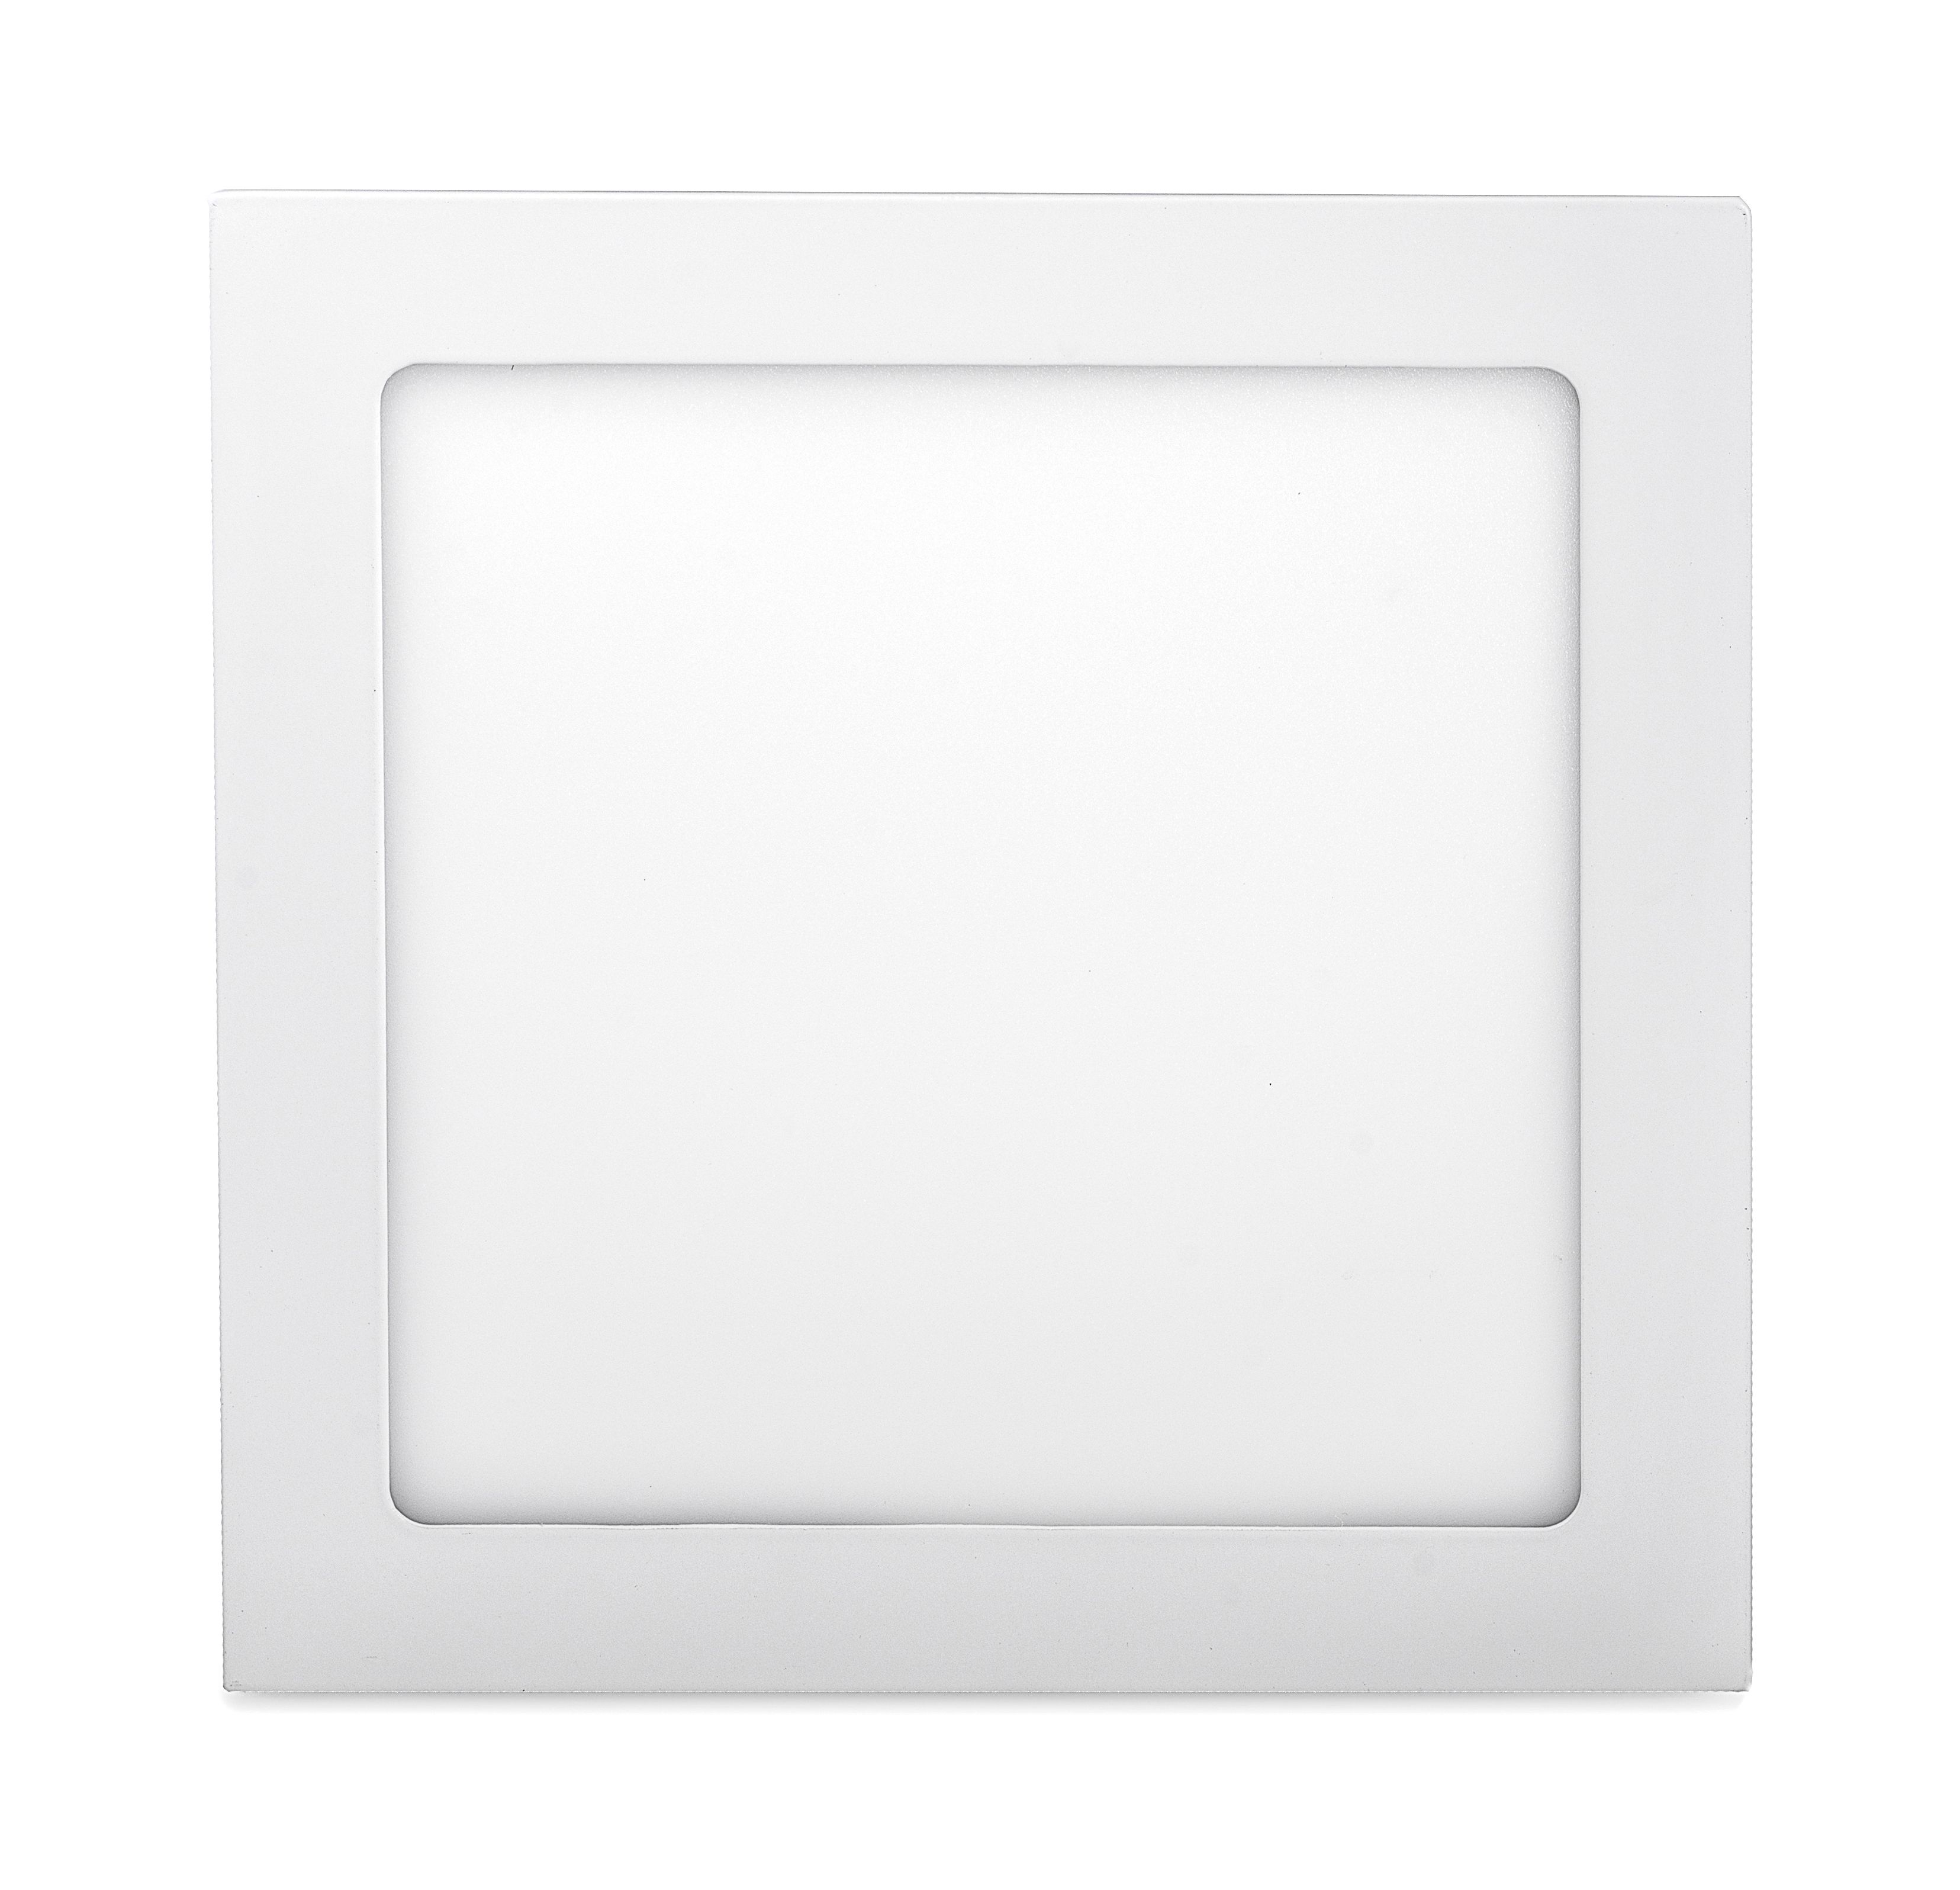 T-LED Biely vstavaný LED panel hranatý 171 x 171mm 12W Teplá biela - POSLEDNÝ KUS 10256